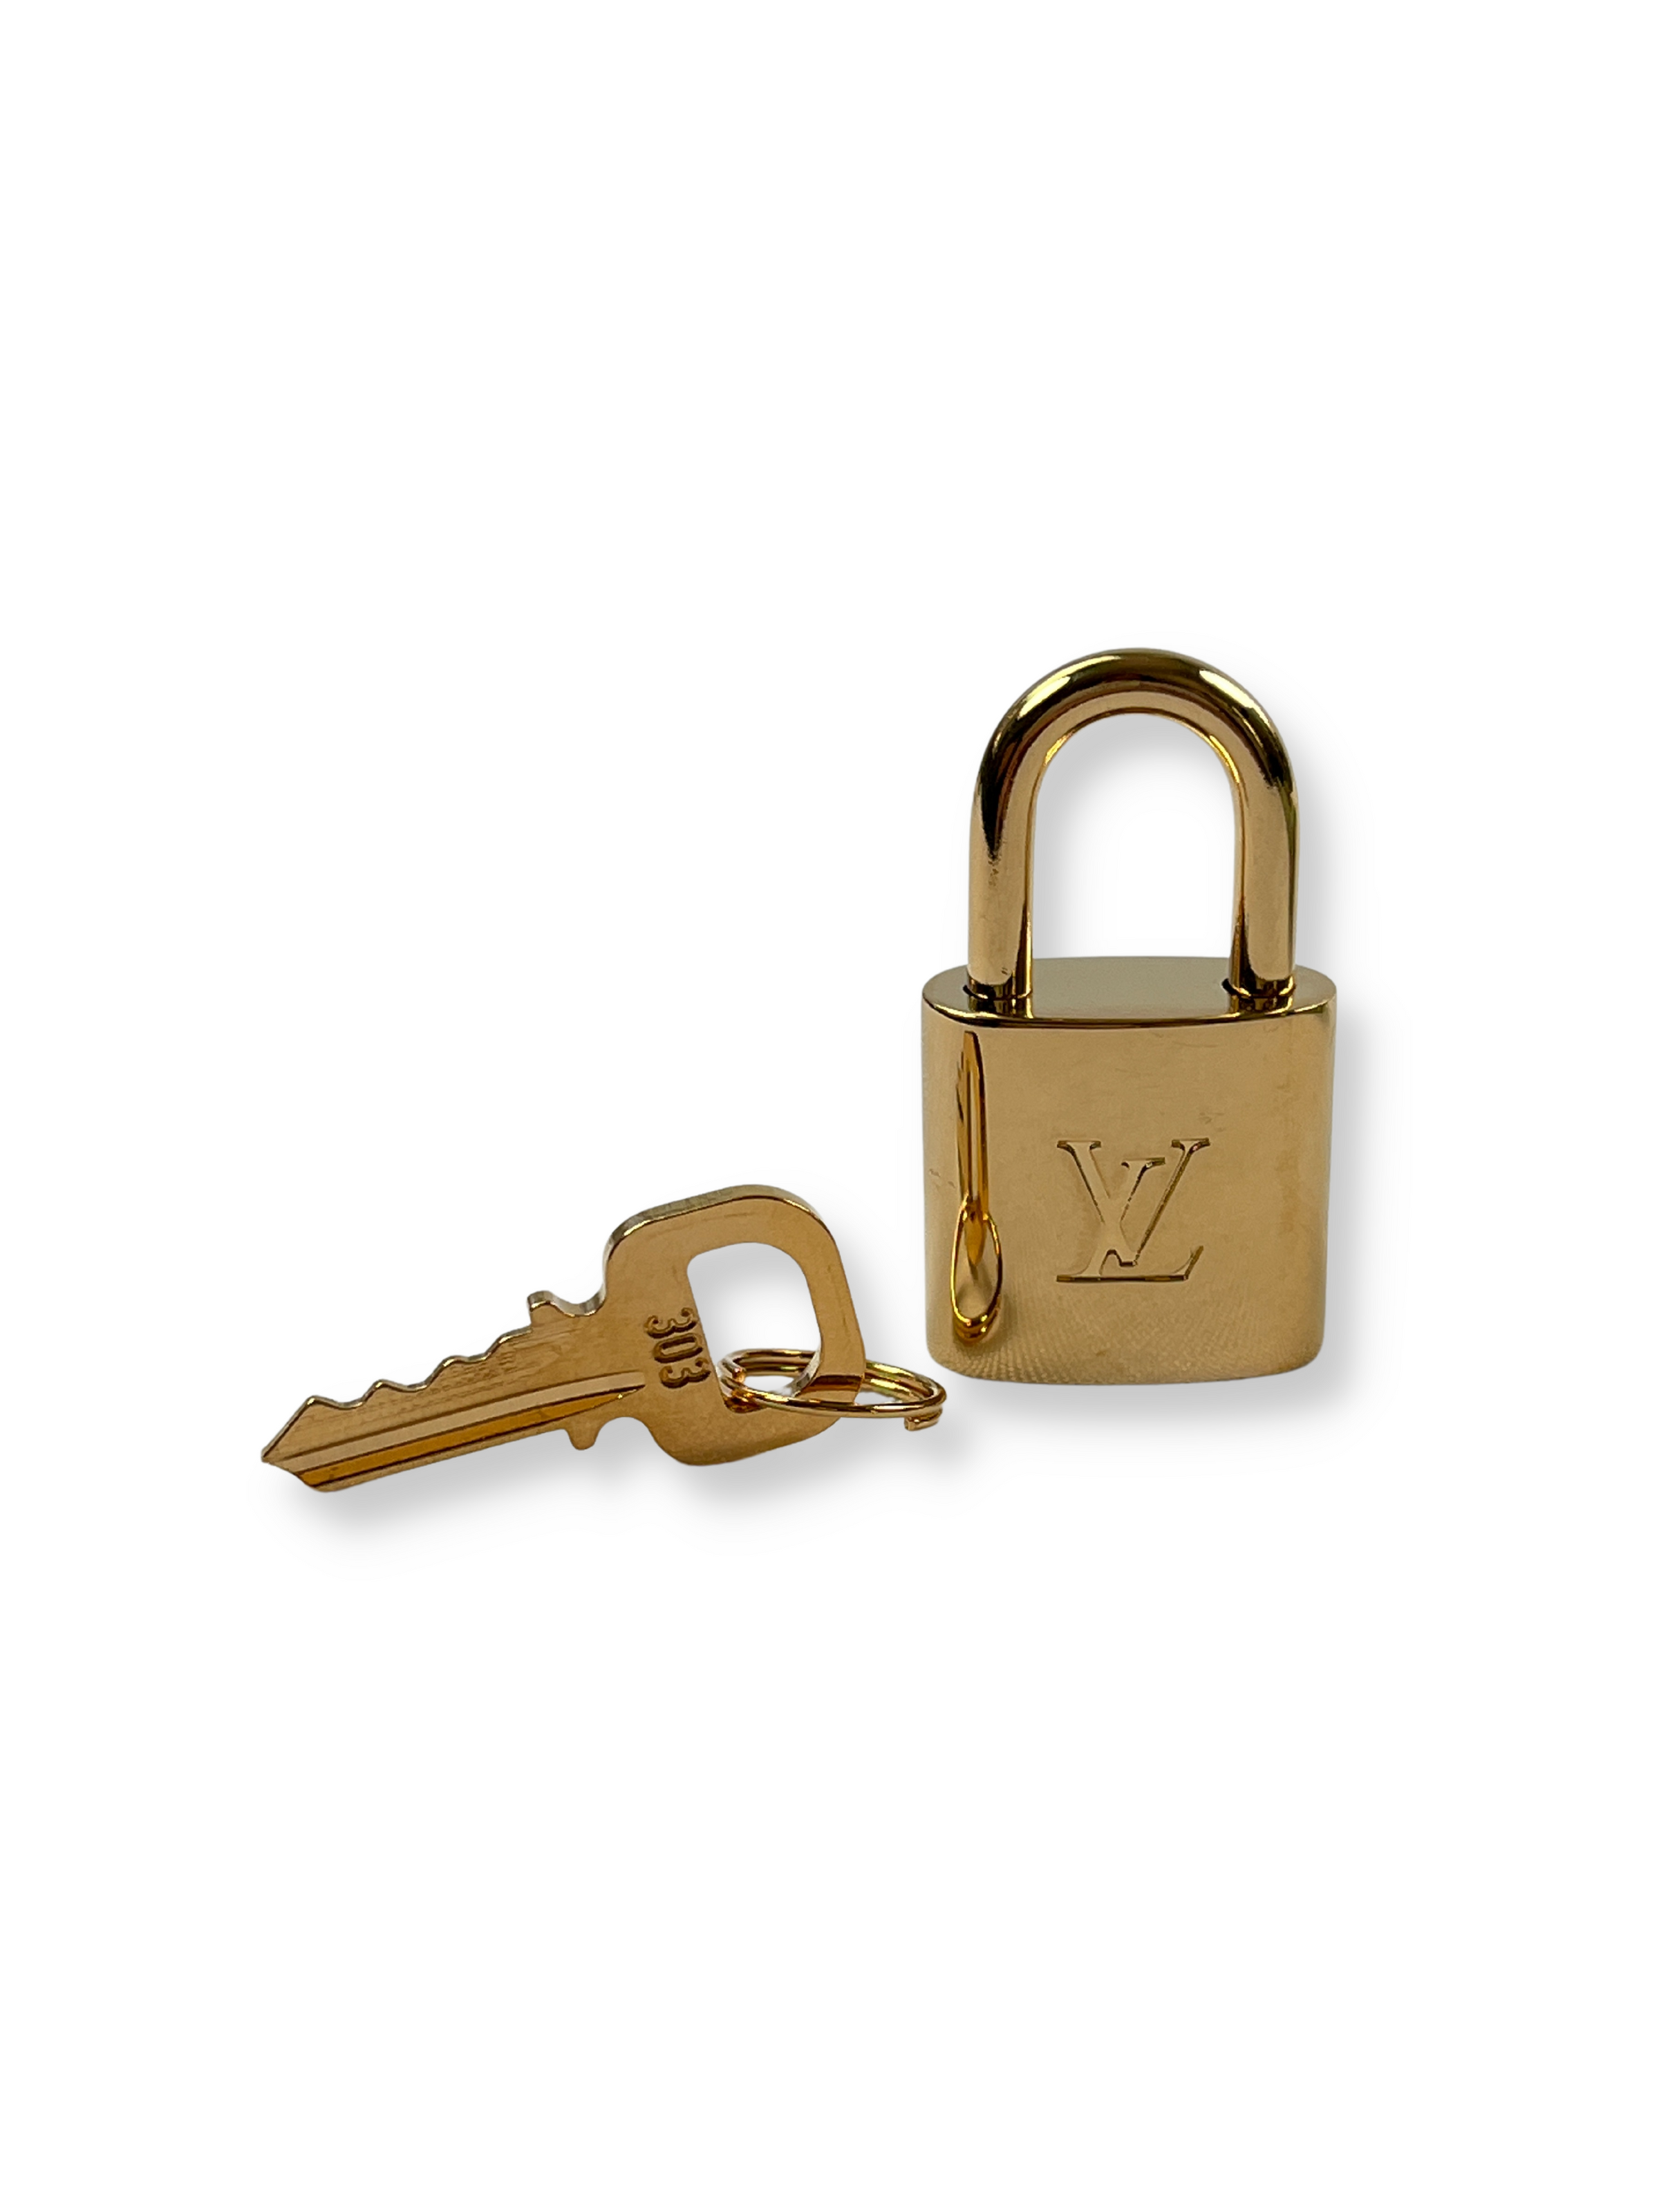 Authentic Louis Vuitton Lock/Padlock & Key Set - Shiny Golden Brass Tone